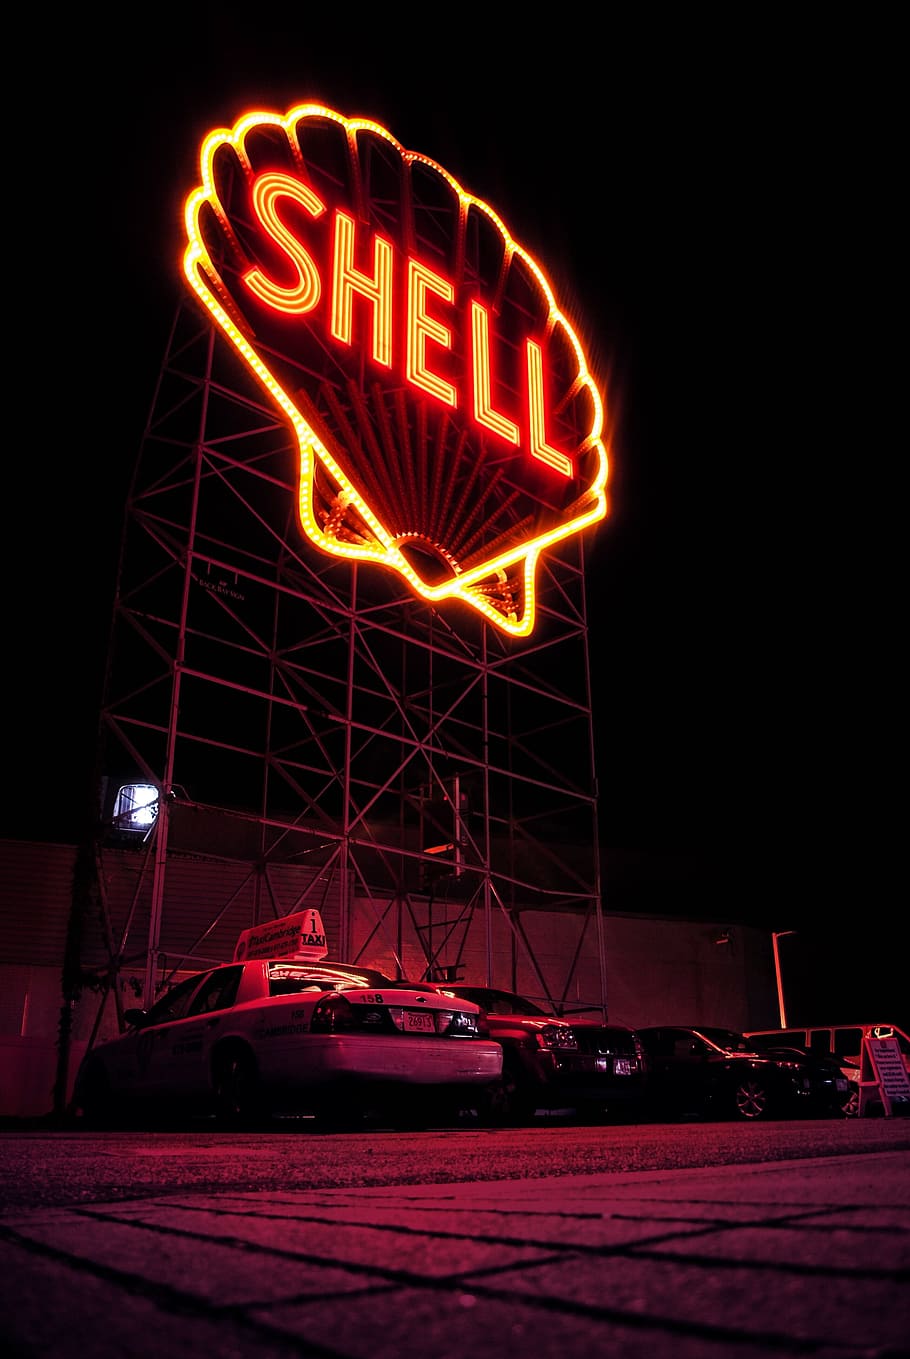 shell, billboard, oil, company, steel, logo, dark, night, light, car